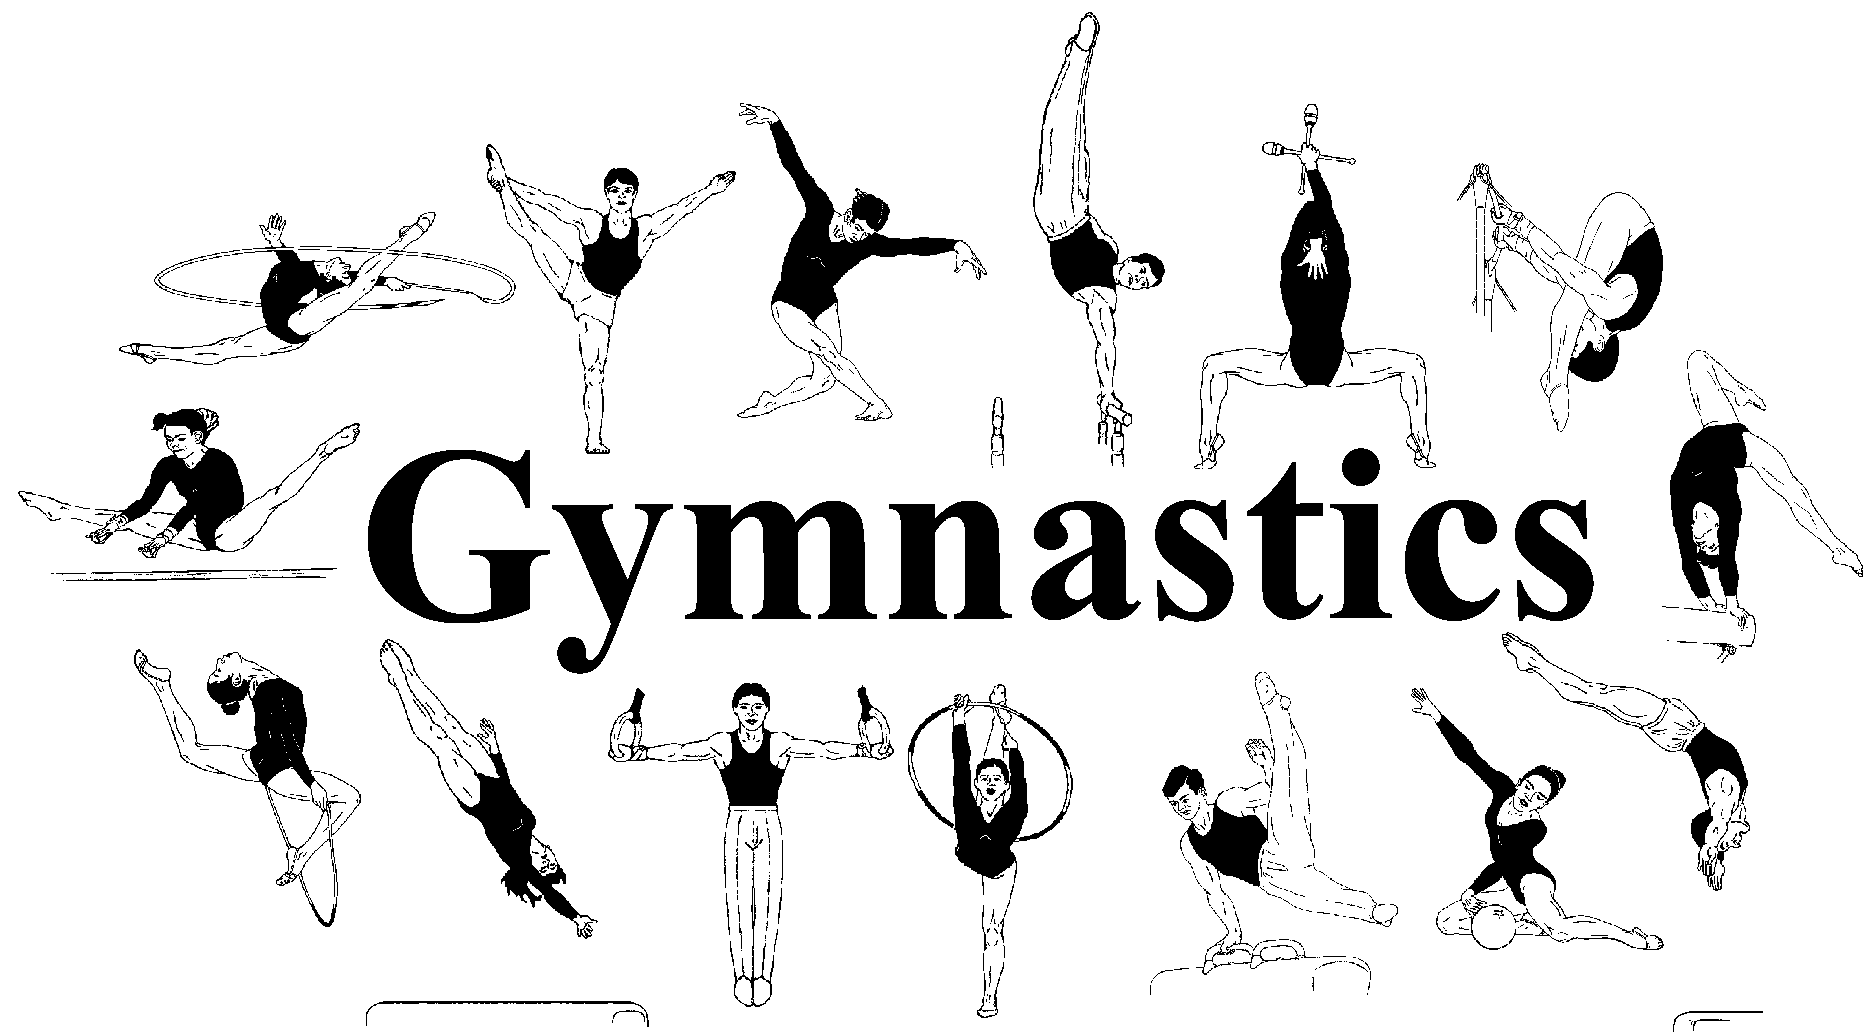 Gymnastics - The Art of Movement!